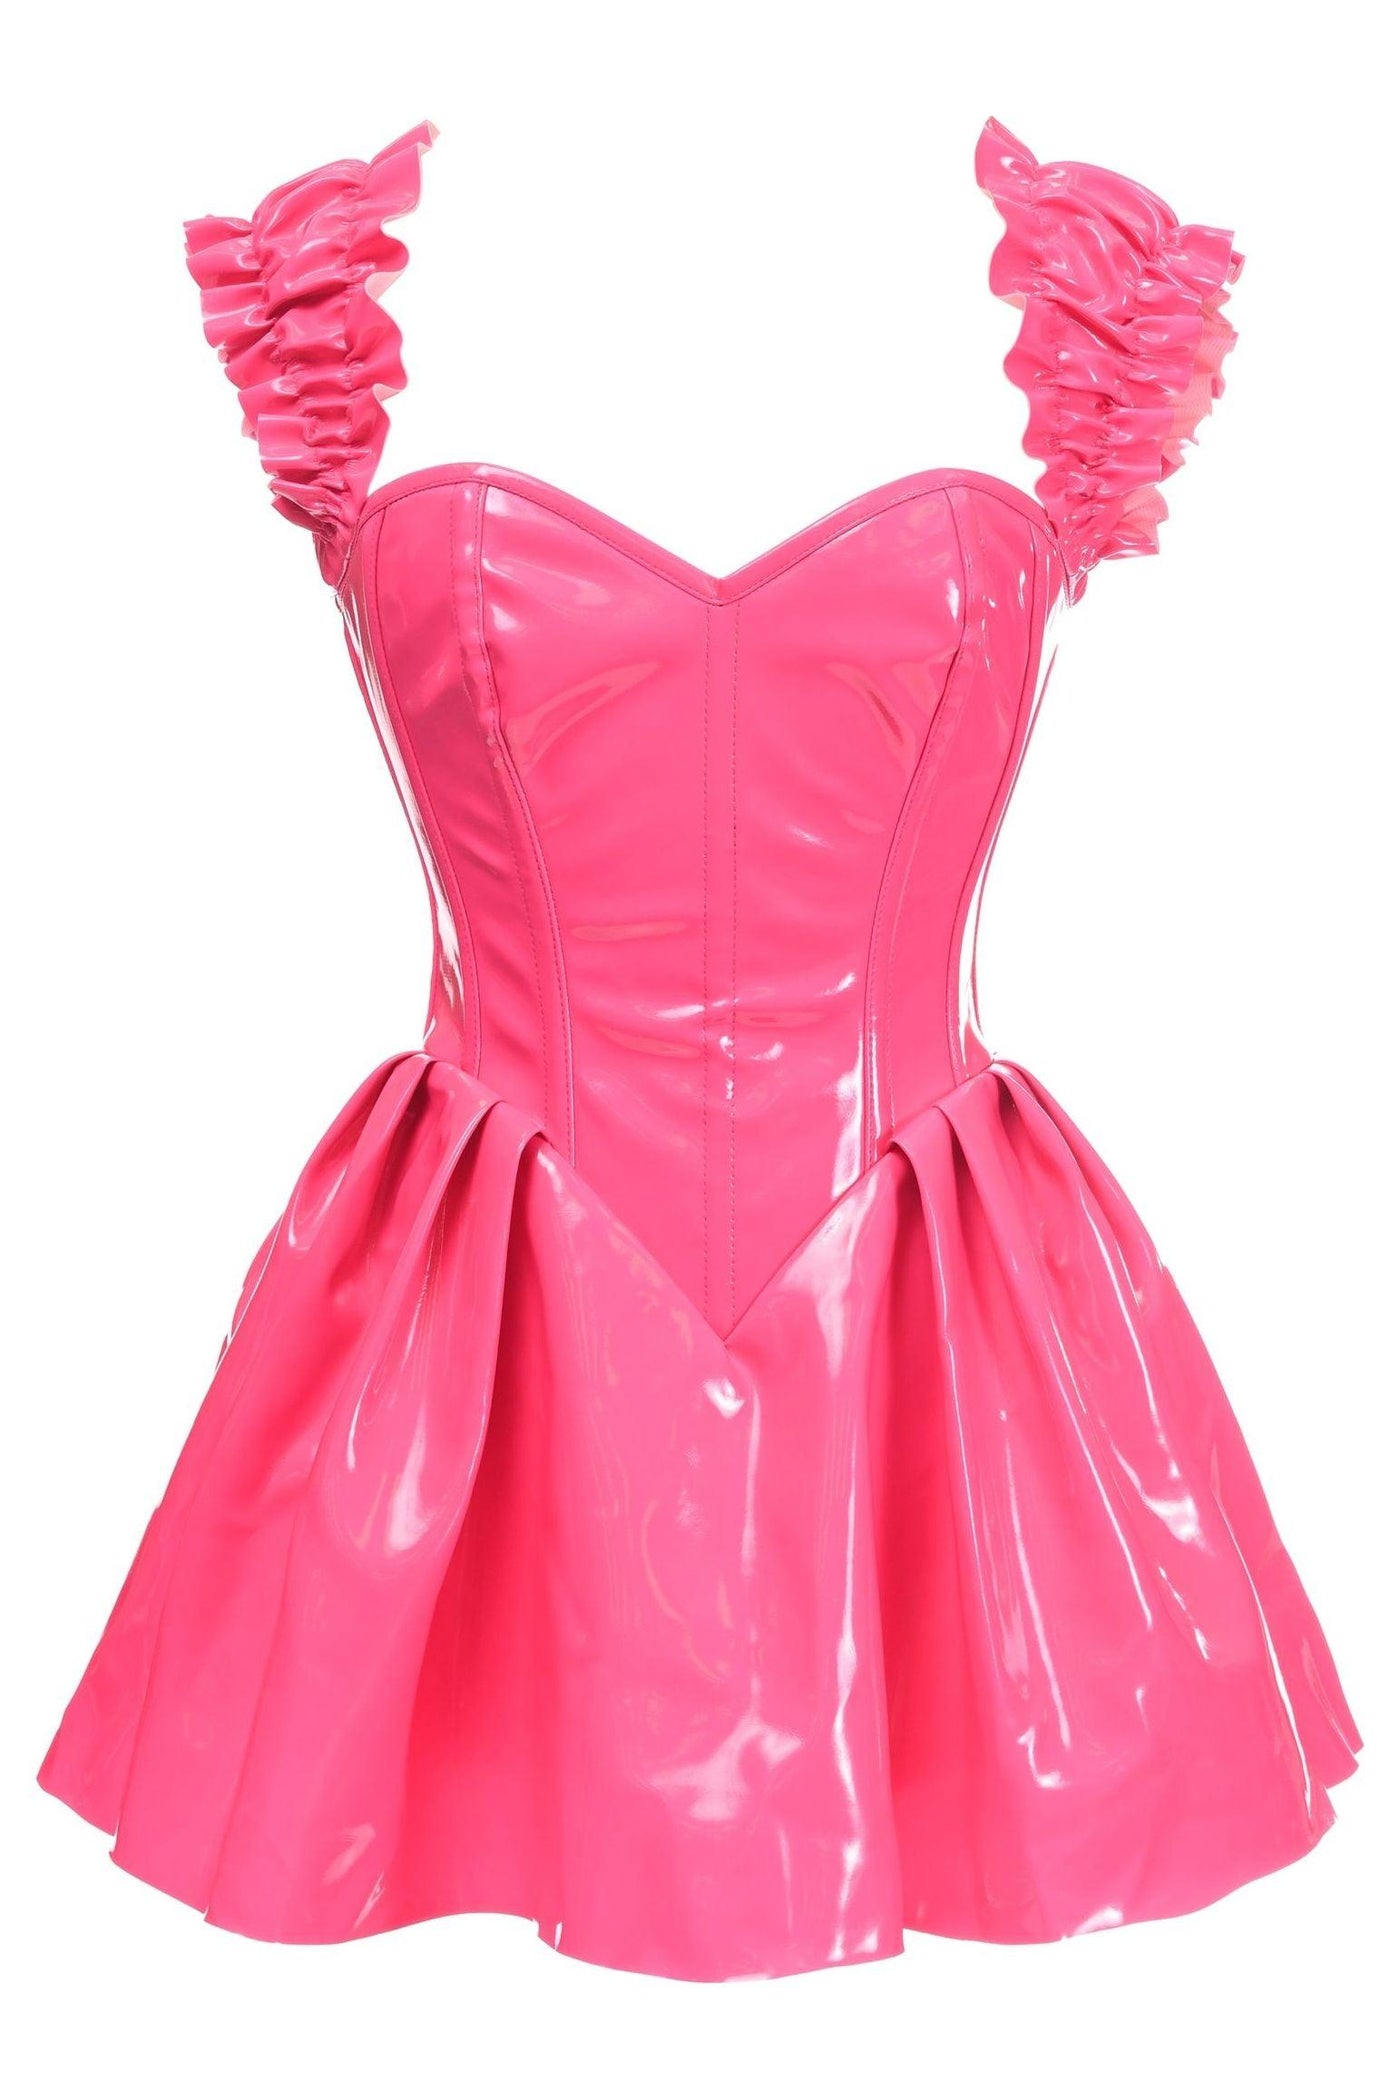 Top Drawer Steel Boned Hot Pink Patent PVC Vinyl Corset Dress - AMIClubwear